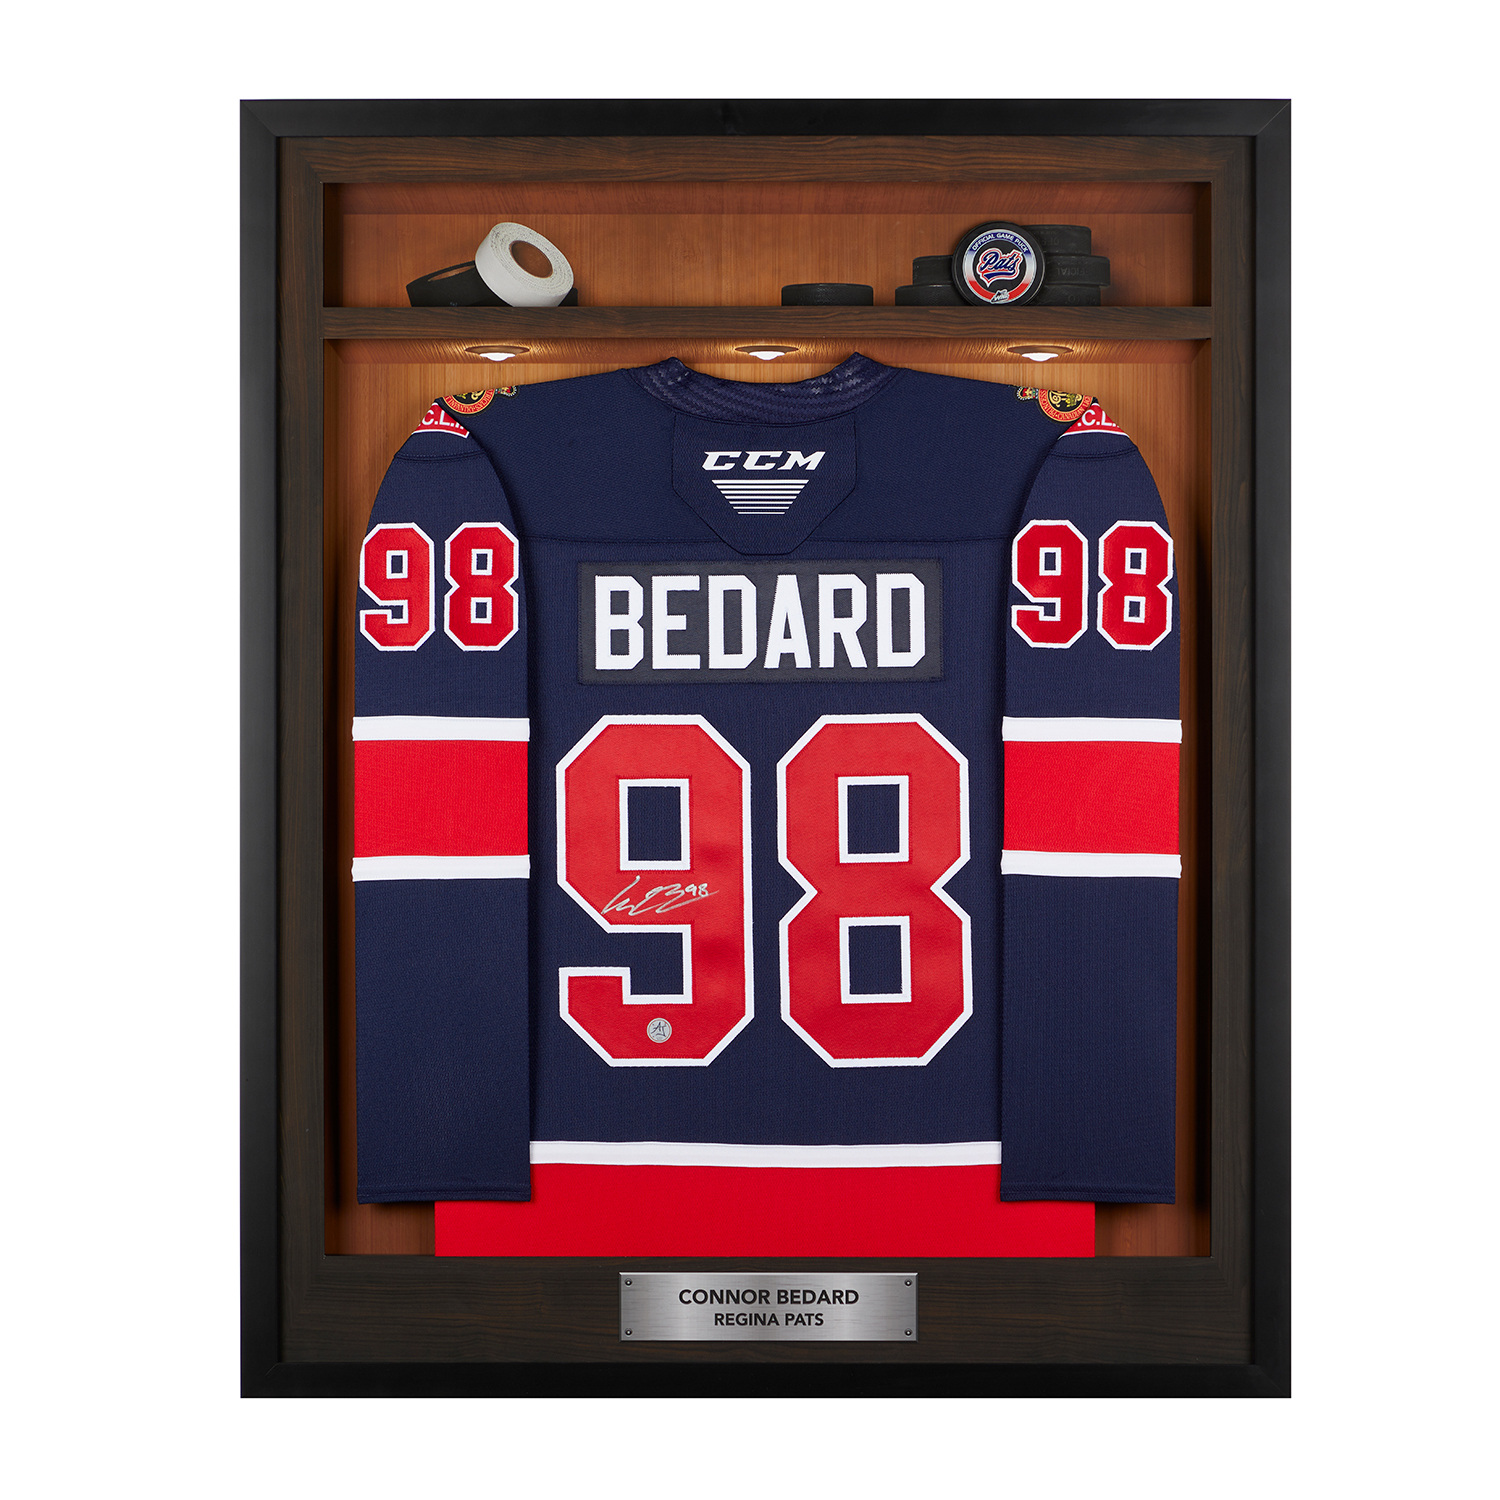 Regina Pats (Bedard) Game Worn Jersey Auction : r/hockeyjerseys